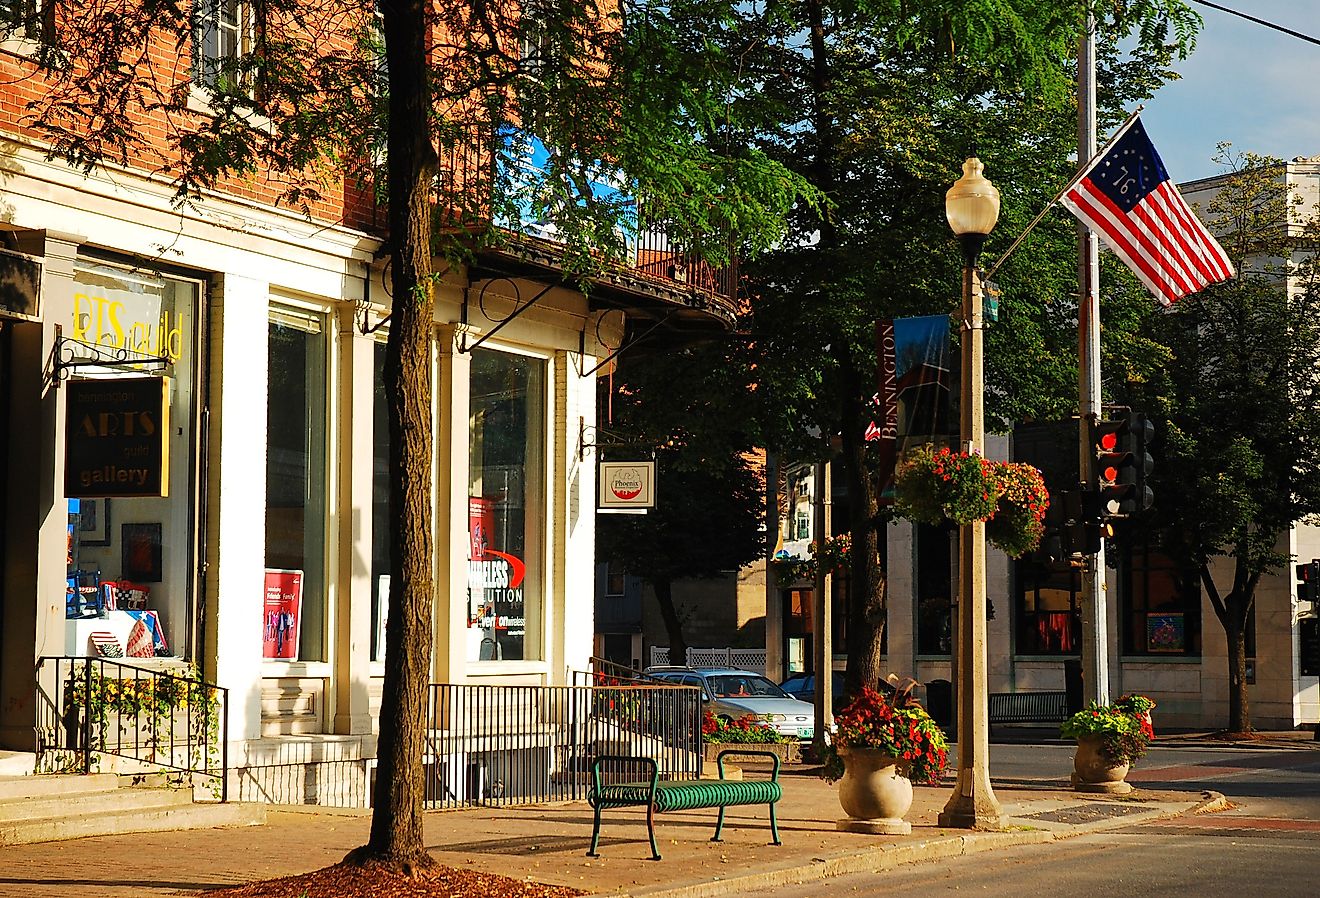 The downtown district of Bennington, Vermont. Image credit James Kirkikis via Shutterstock